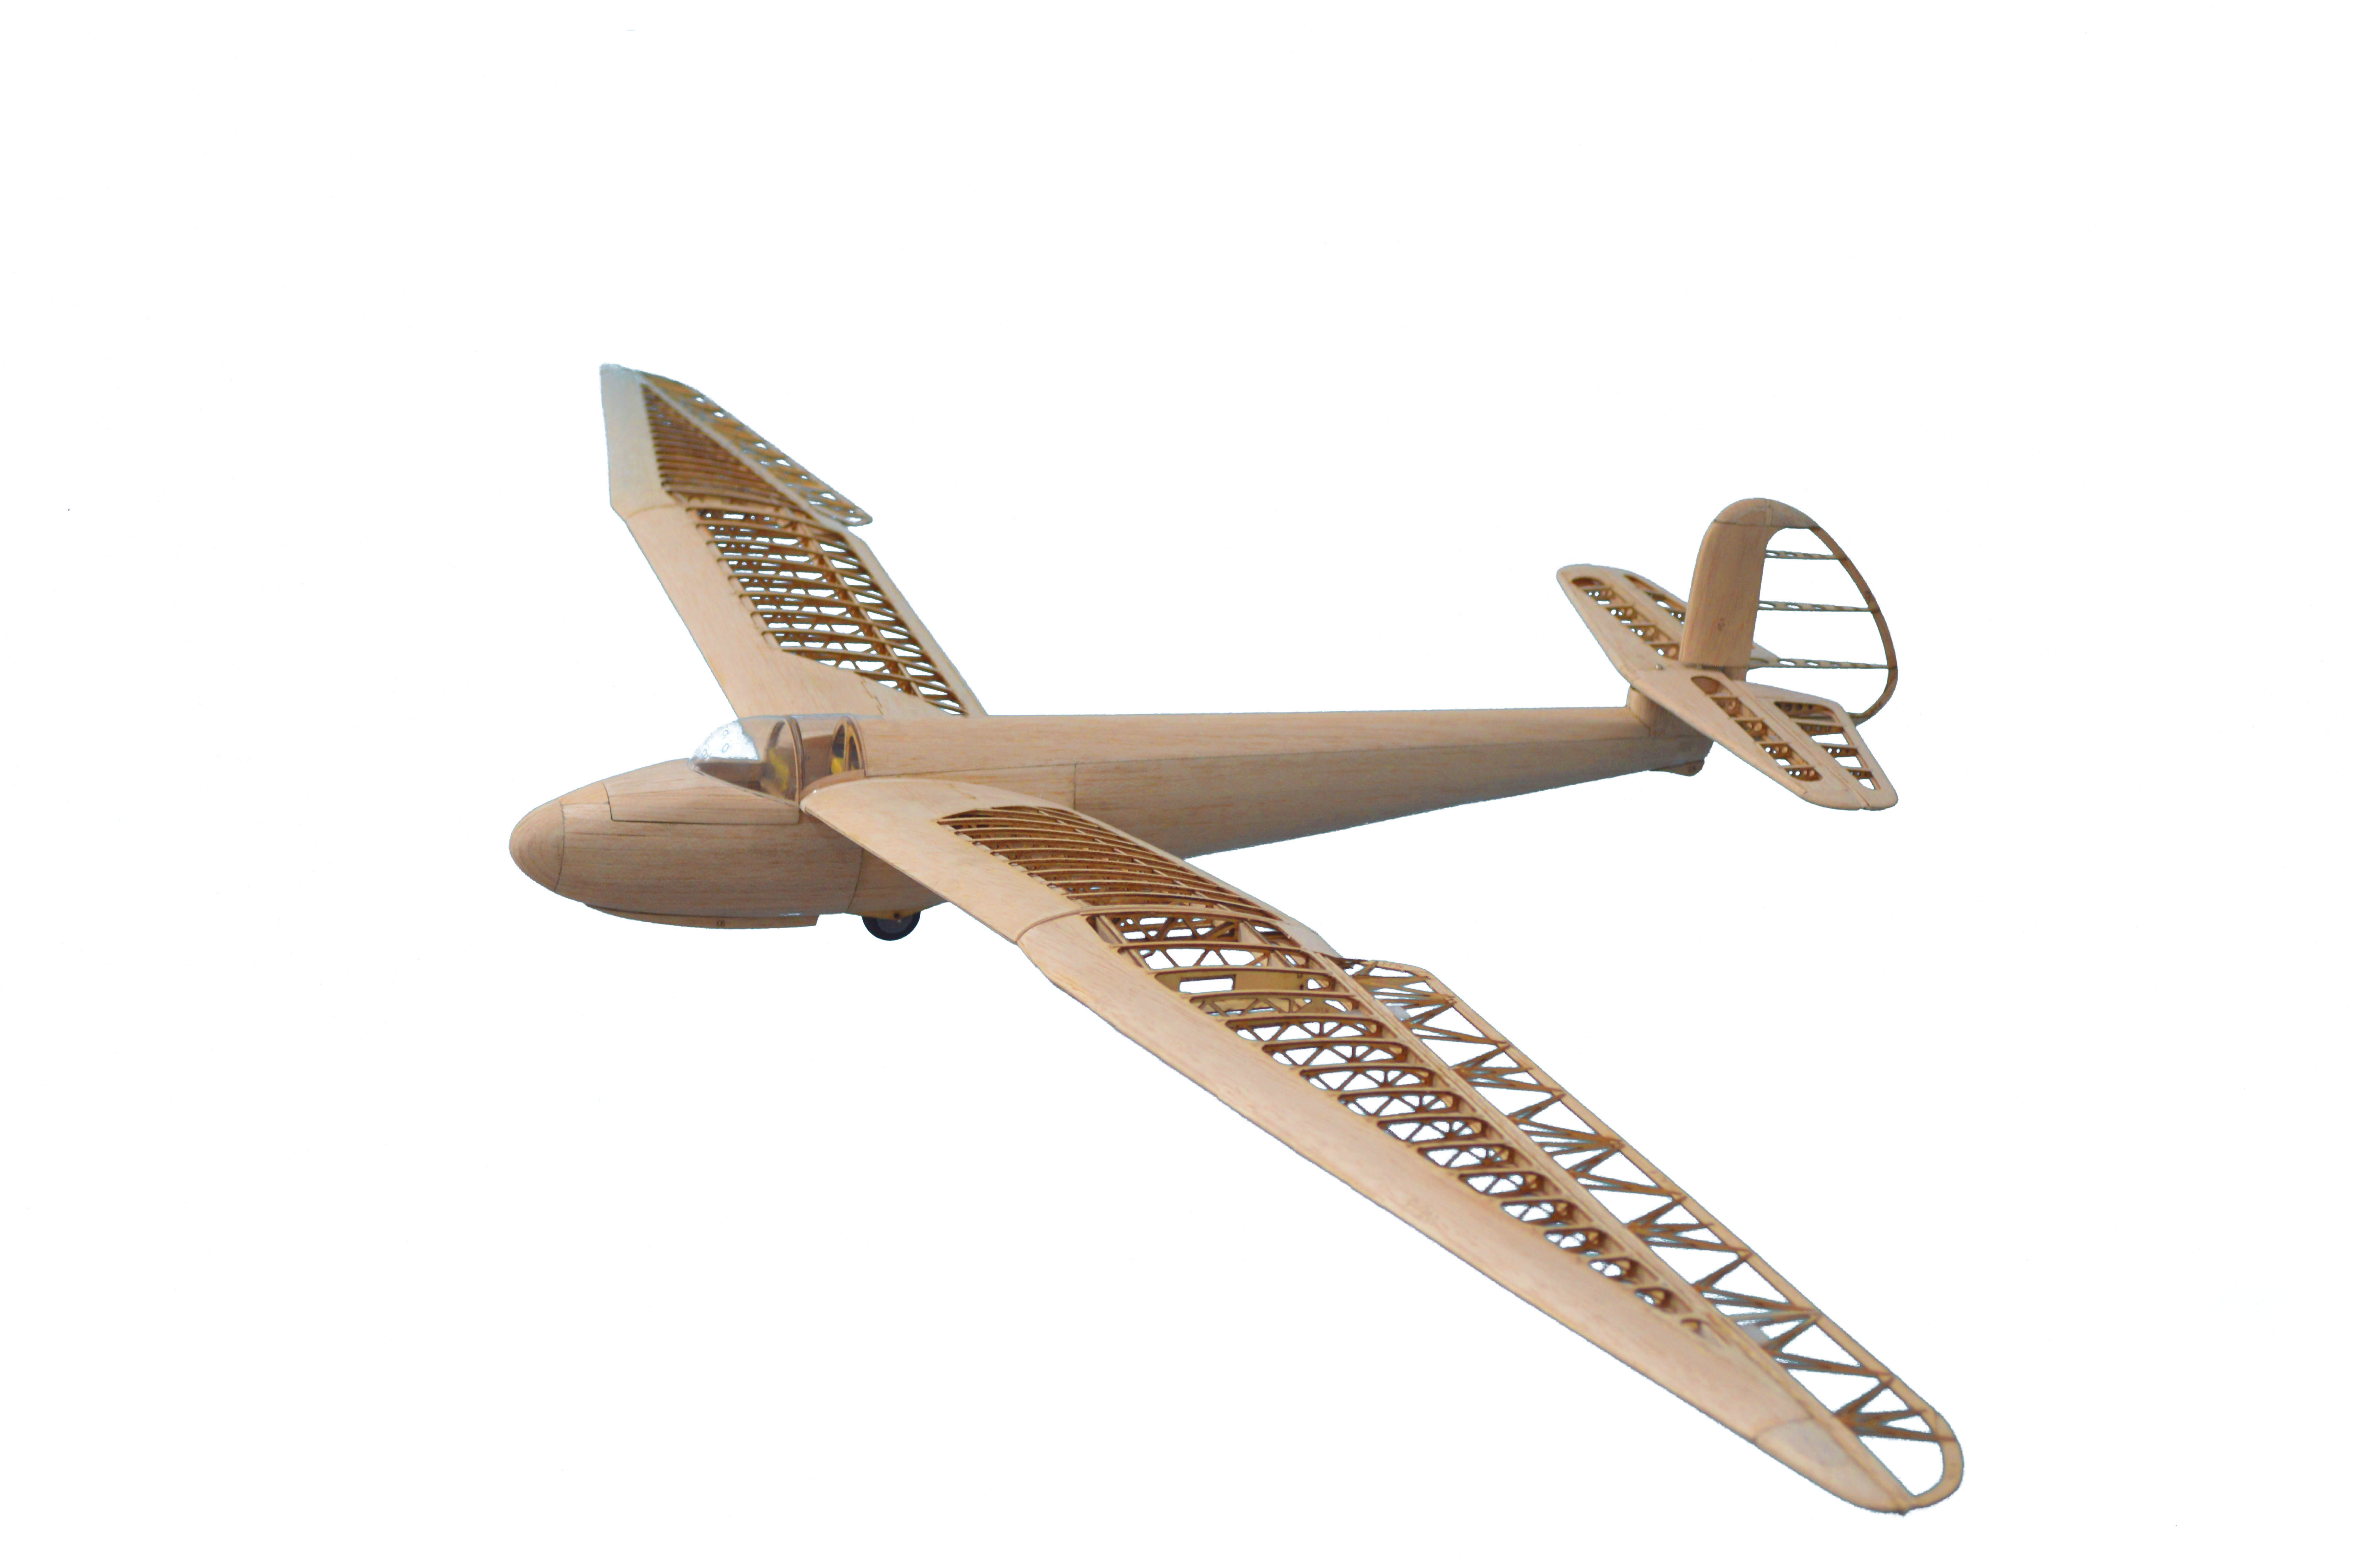 Tony-Rays-AeroModel-Minimoa-1422mm-Wingspan-112-Scale-Balsa-Wood-Laser-Cut-RC-Airplane-Glider-KIT-1802443-1